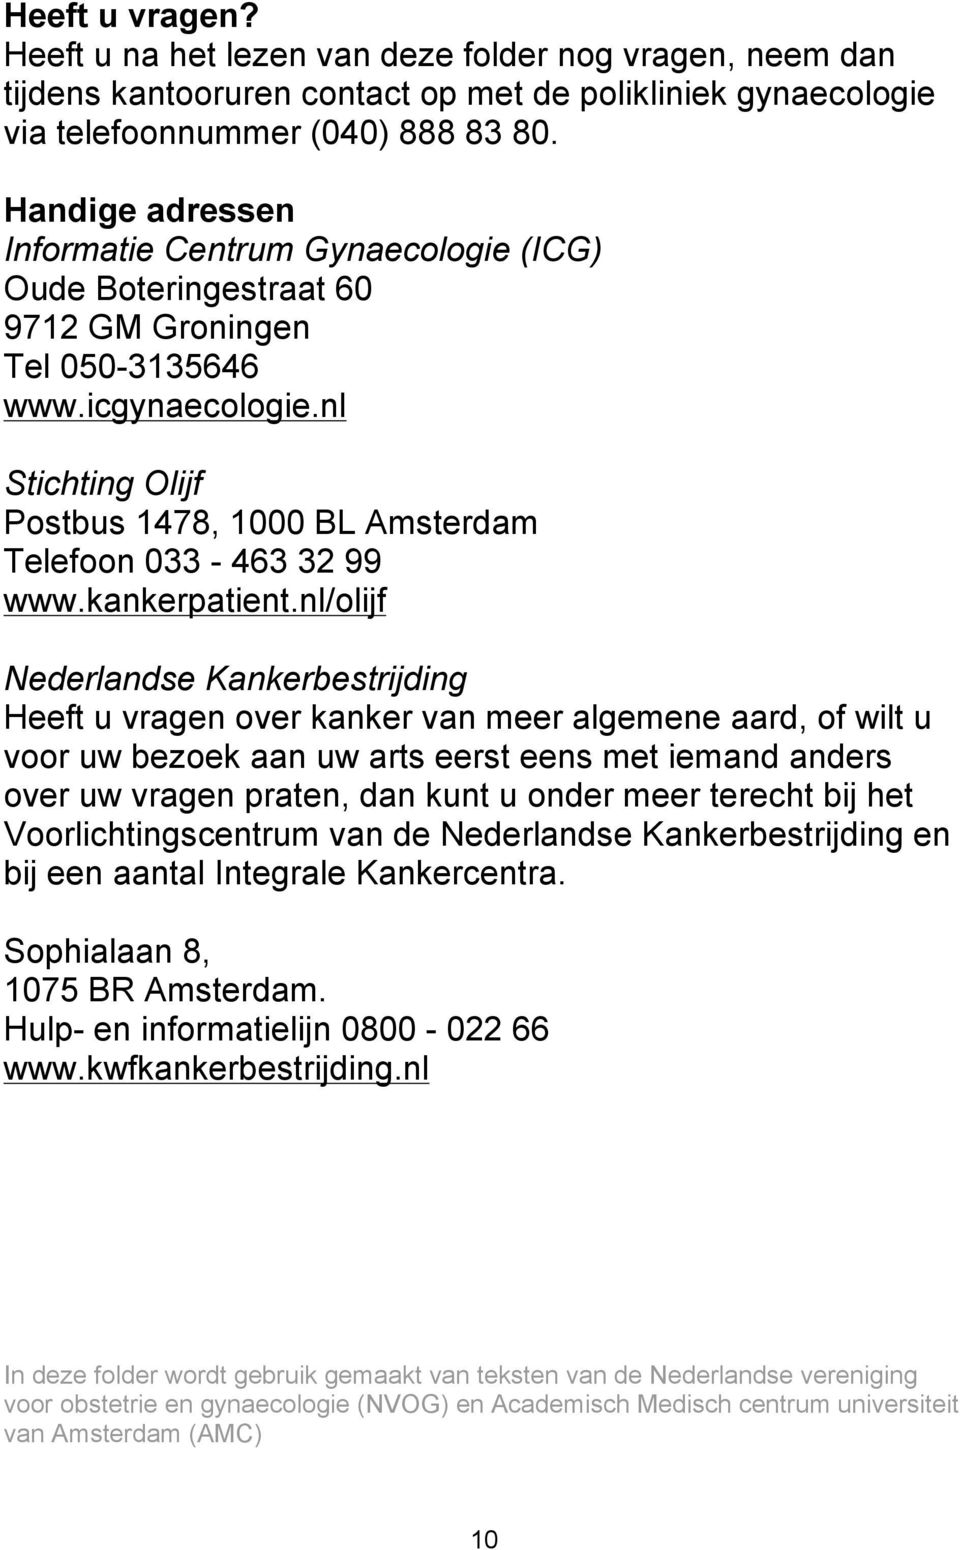 nl Stichting Olijf Postbus 1478, 1000 BL Amsterdam Telefoon 033-463 32 99 www.kankerpatient.